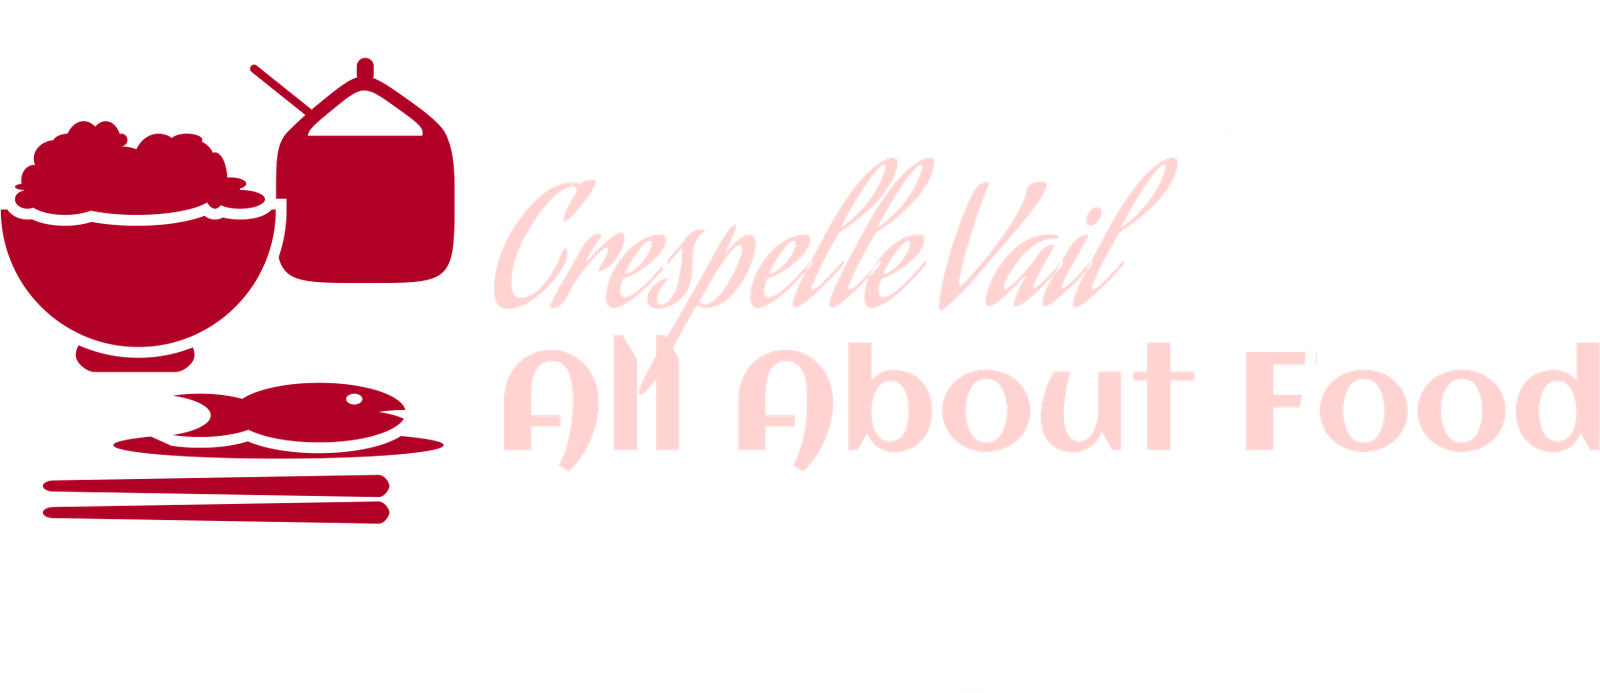 Crespelle Vail